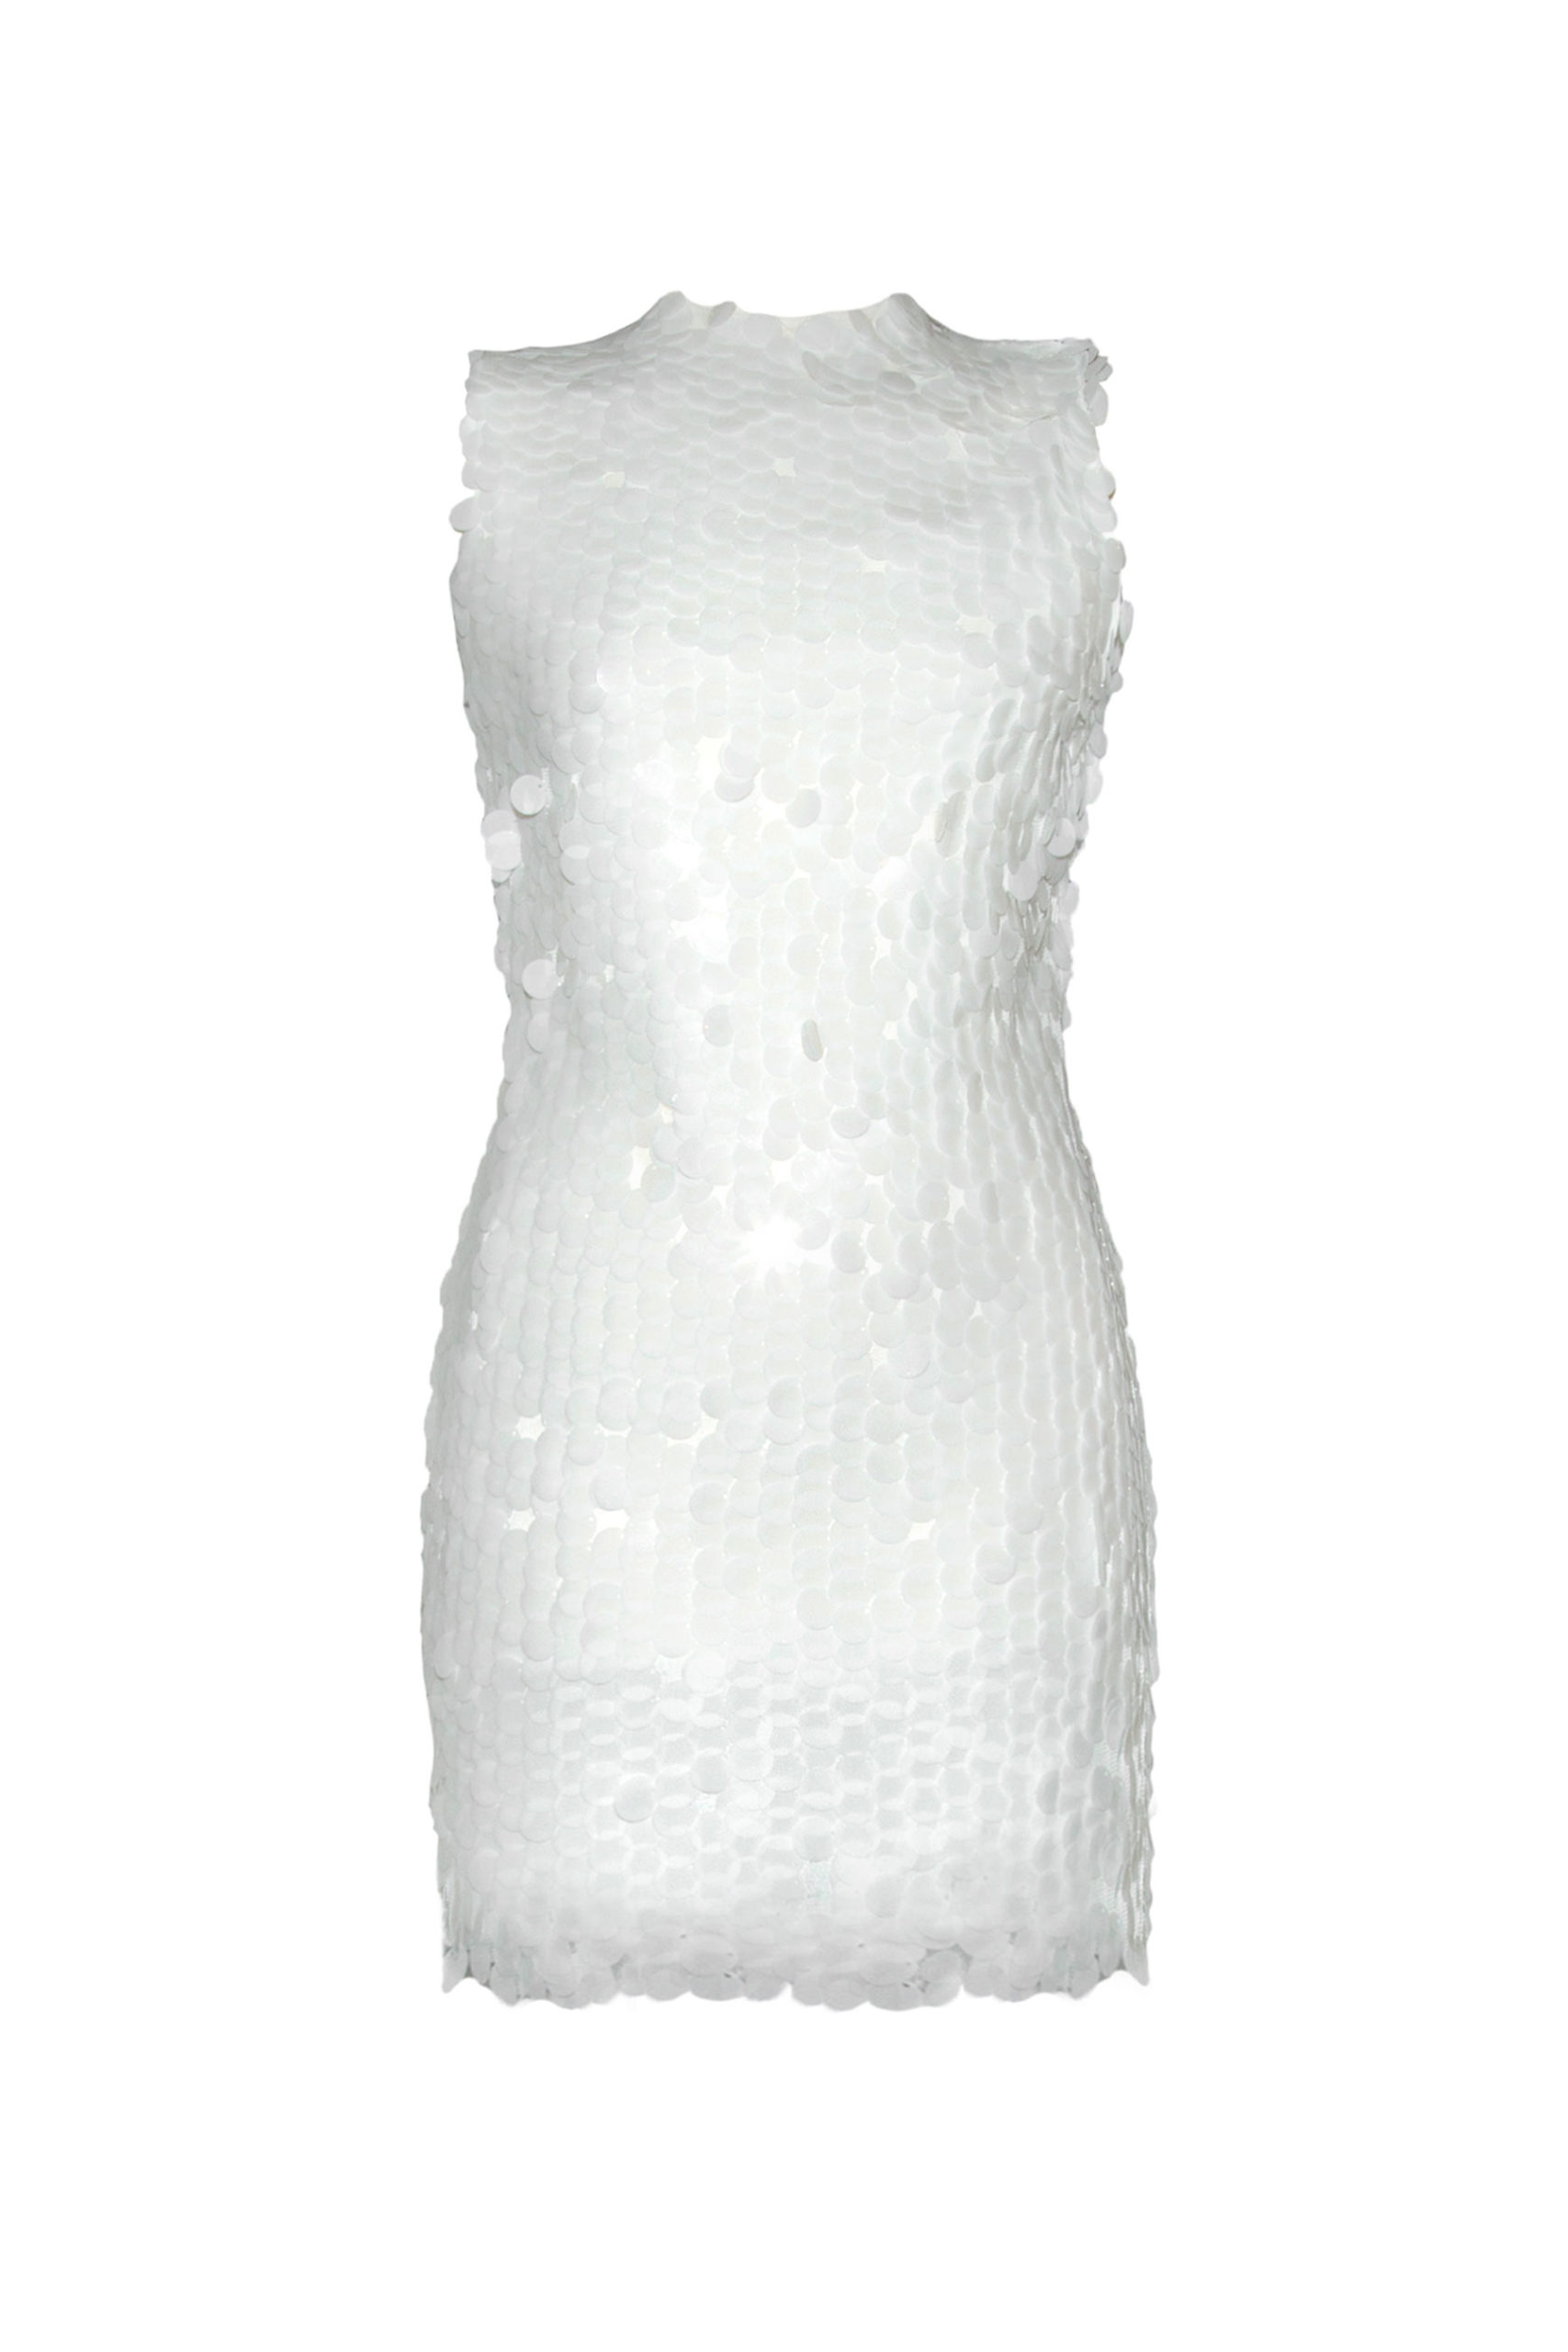 Grabar Treinta dramático Vestido lentejuelas blanco Mermaid Pure - Womance